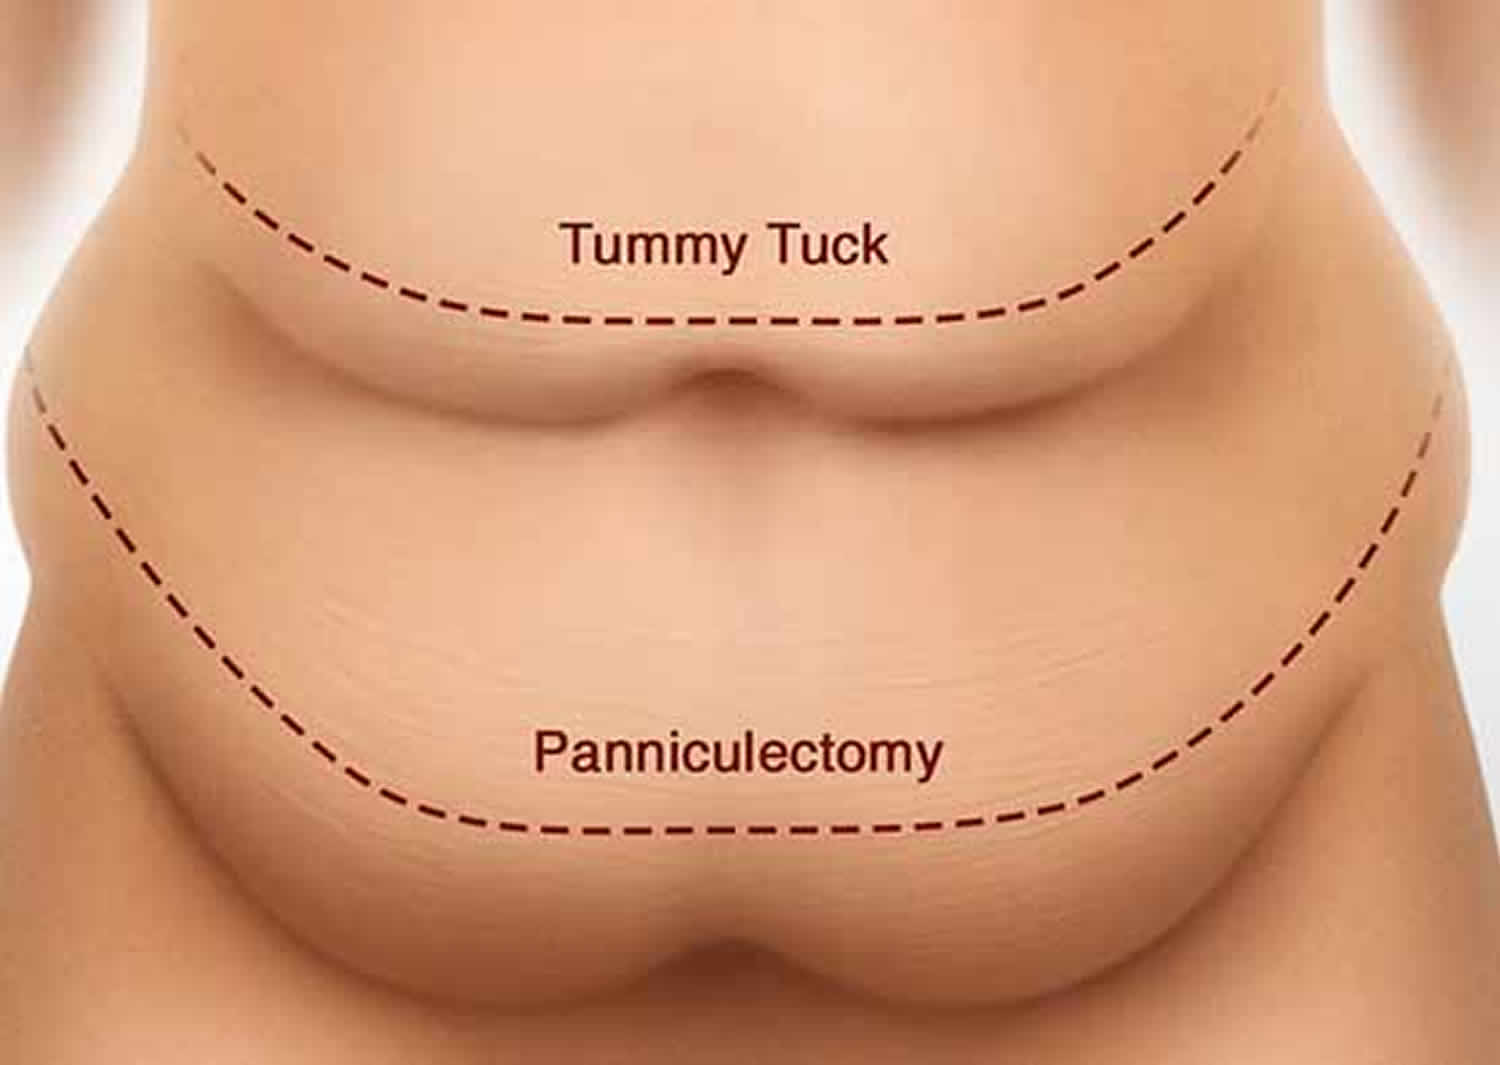 panniculectomy vs tummy tuck